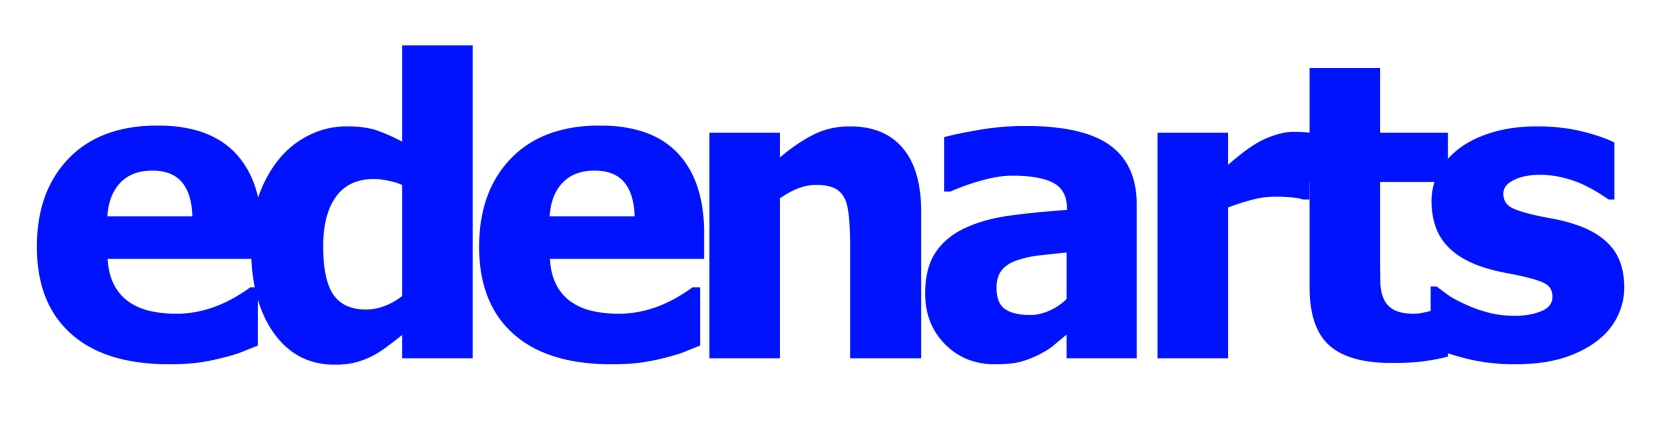 eden arts logo